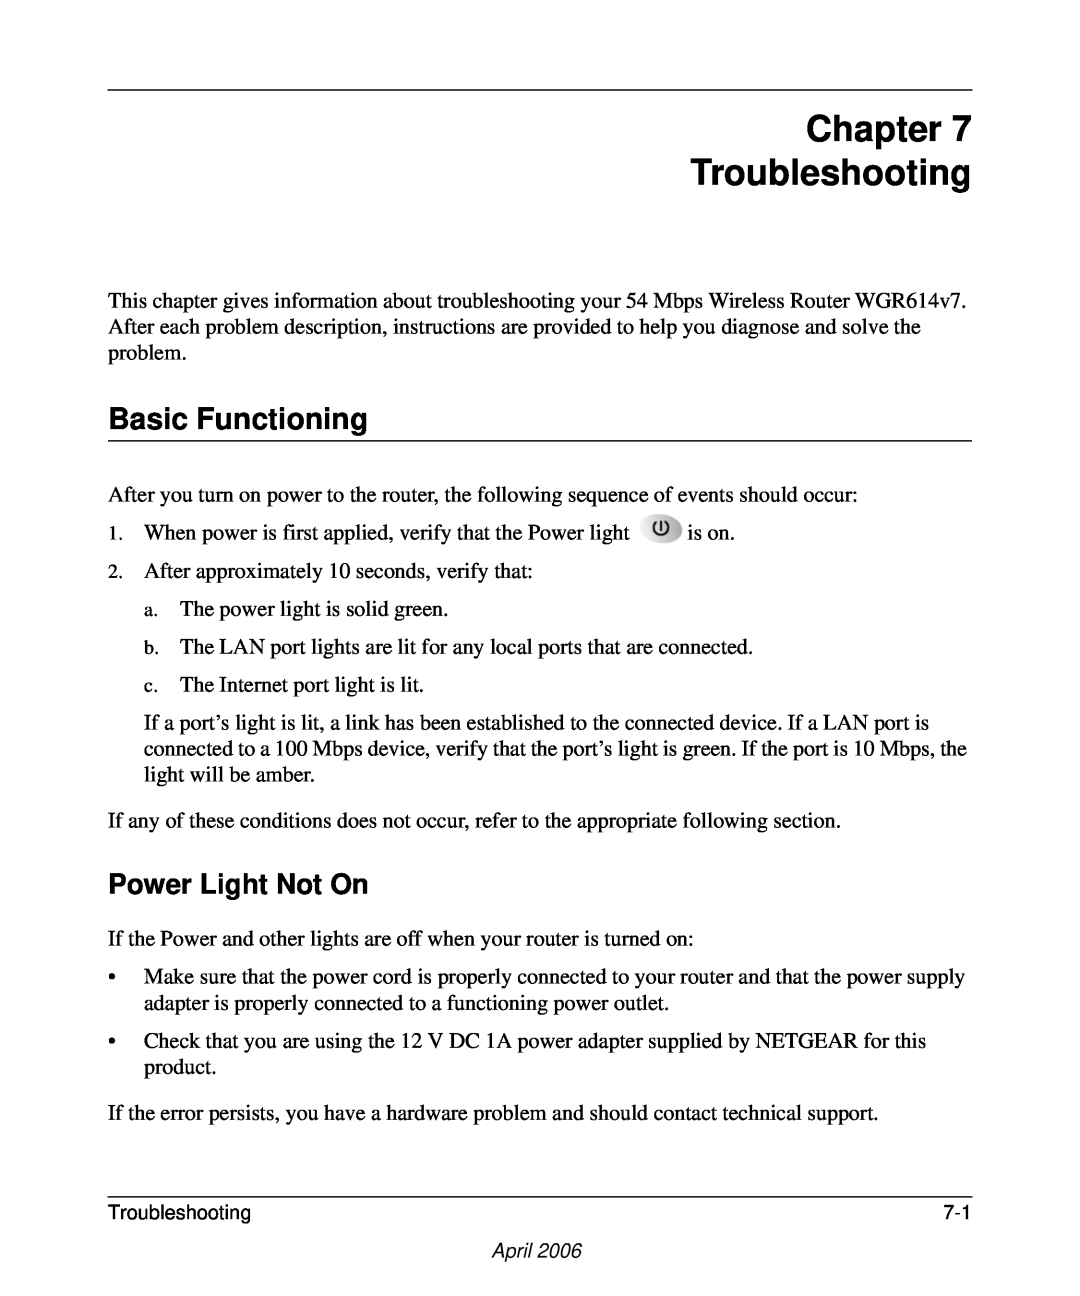 NETGEAR WGR614v7 manual Chapter Troubleshooting, Basic Functioning, Power Light Not On 